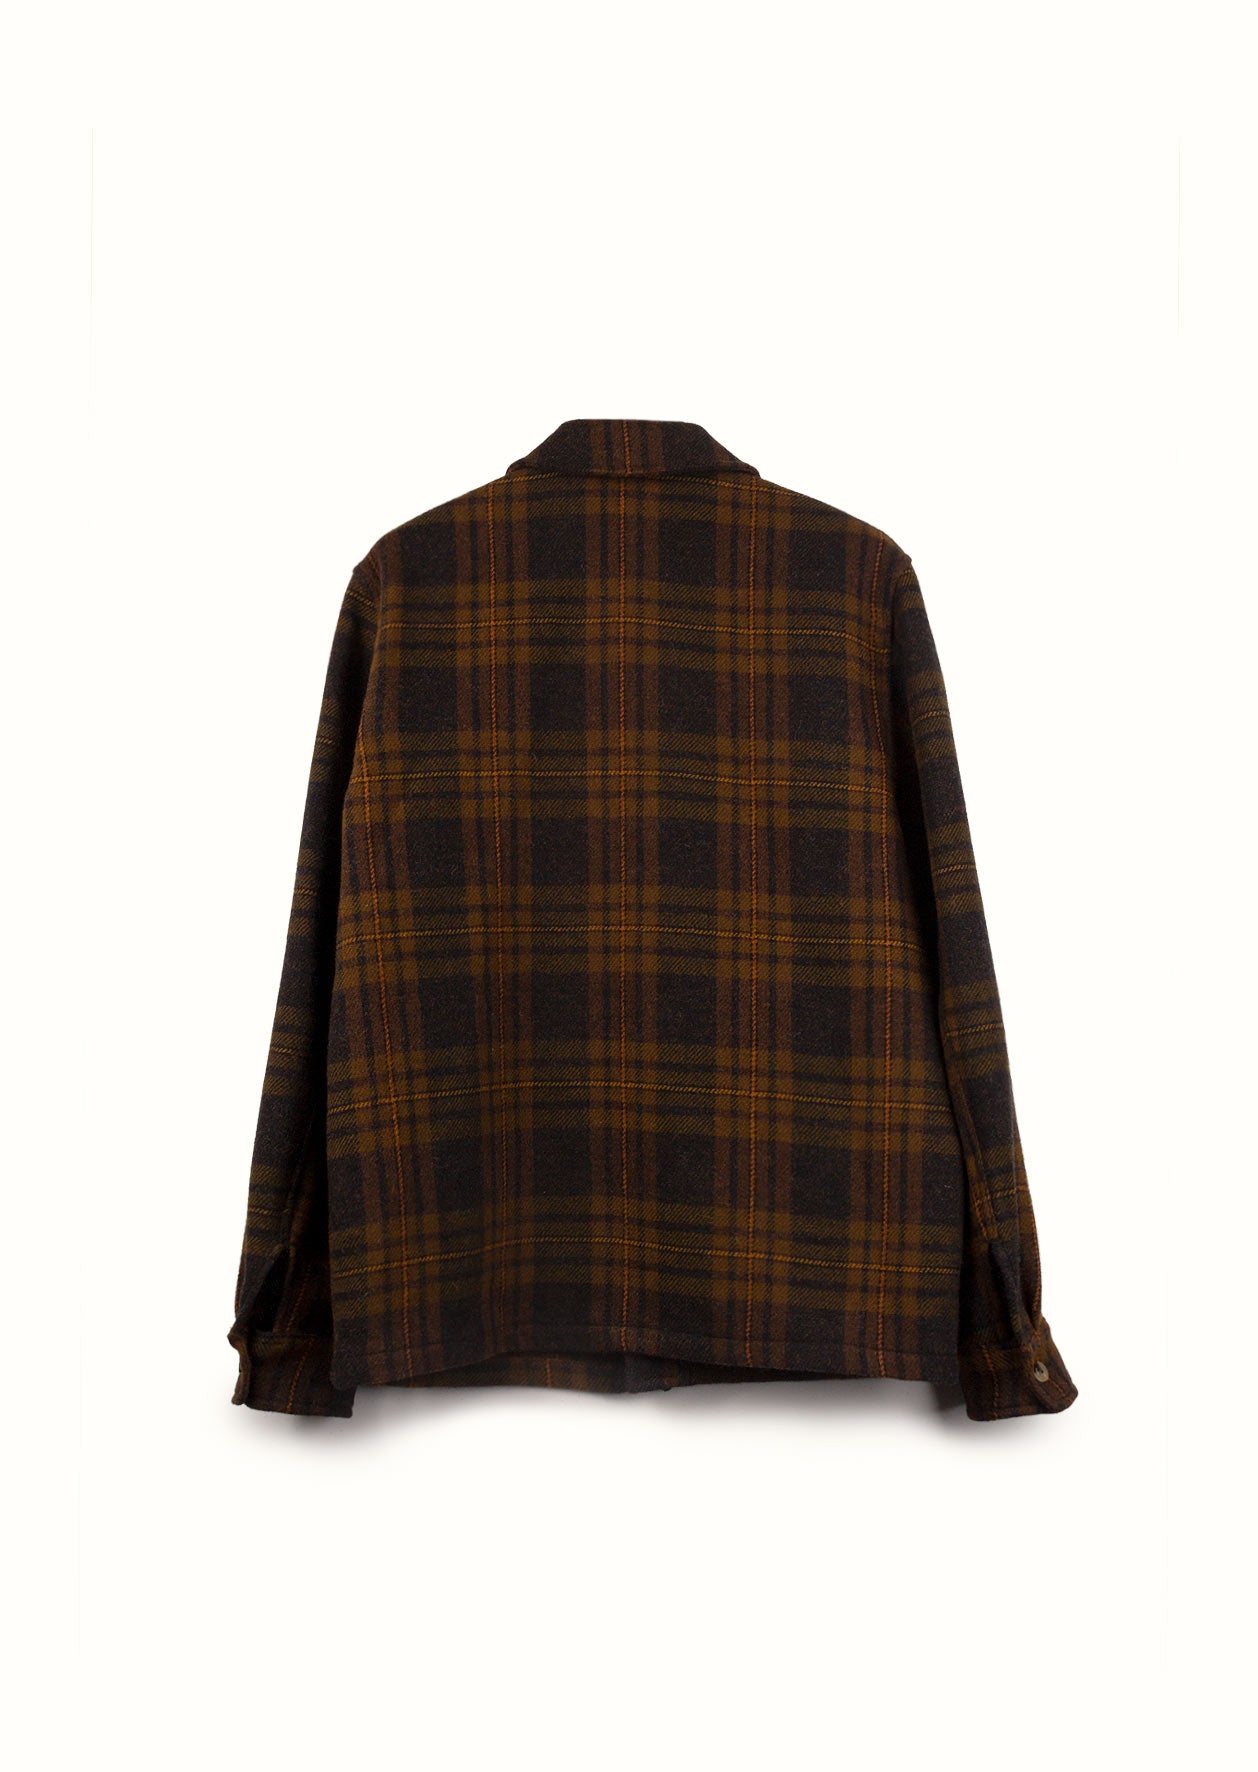 De Bonne Facture - Work jacket - Wool cloth tweed - Brown checks